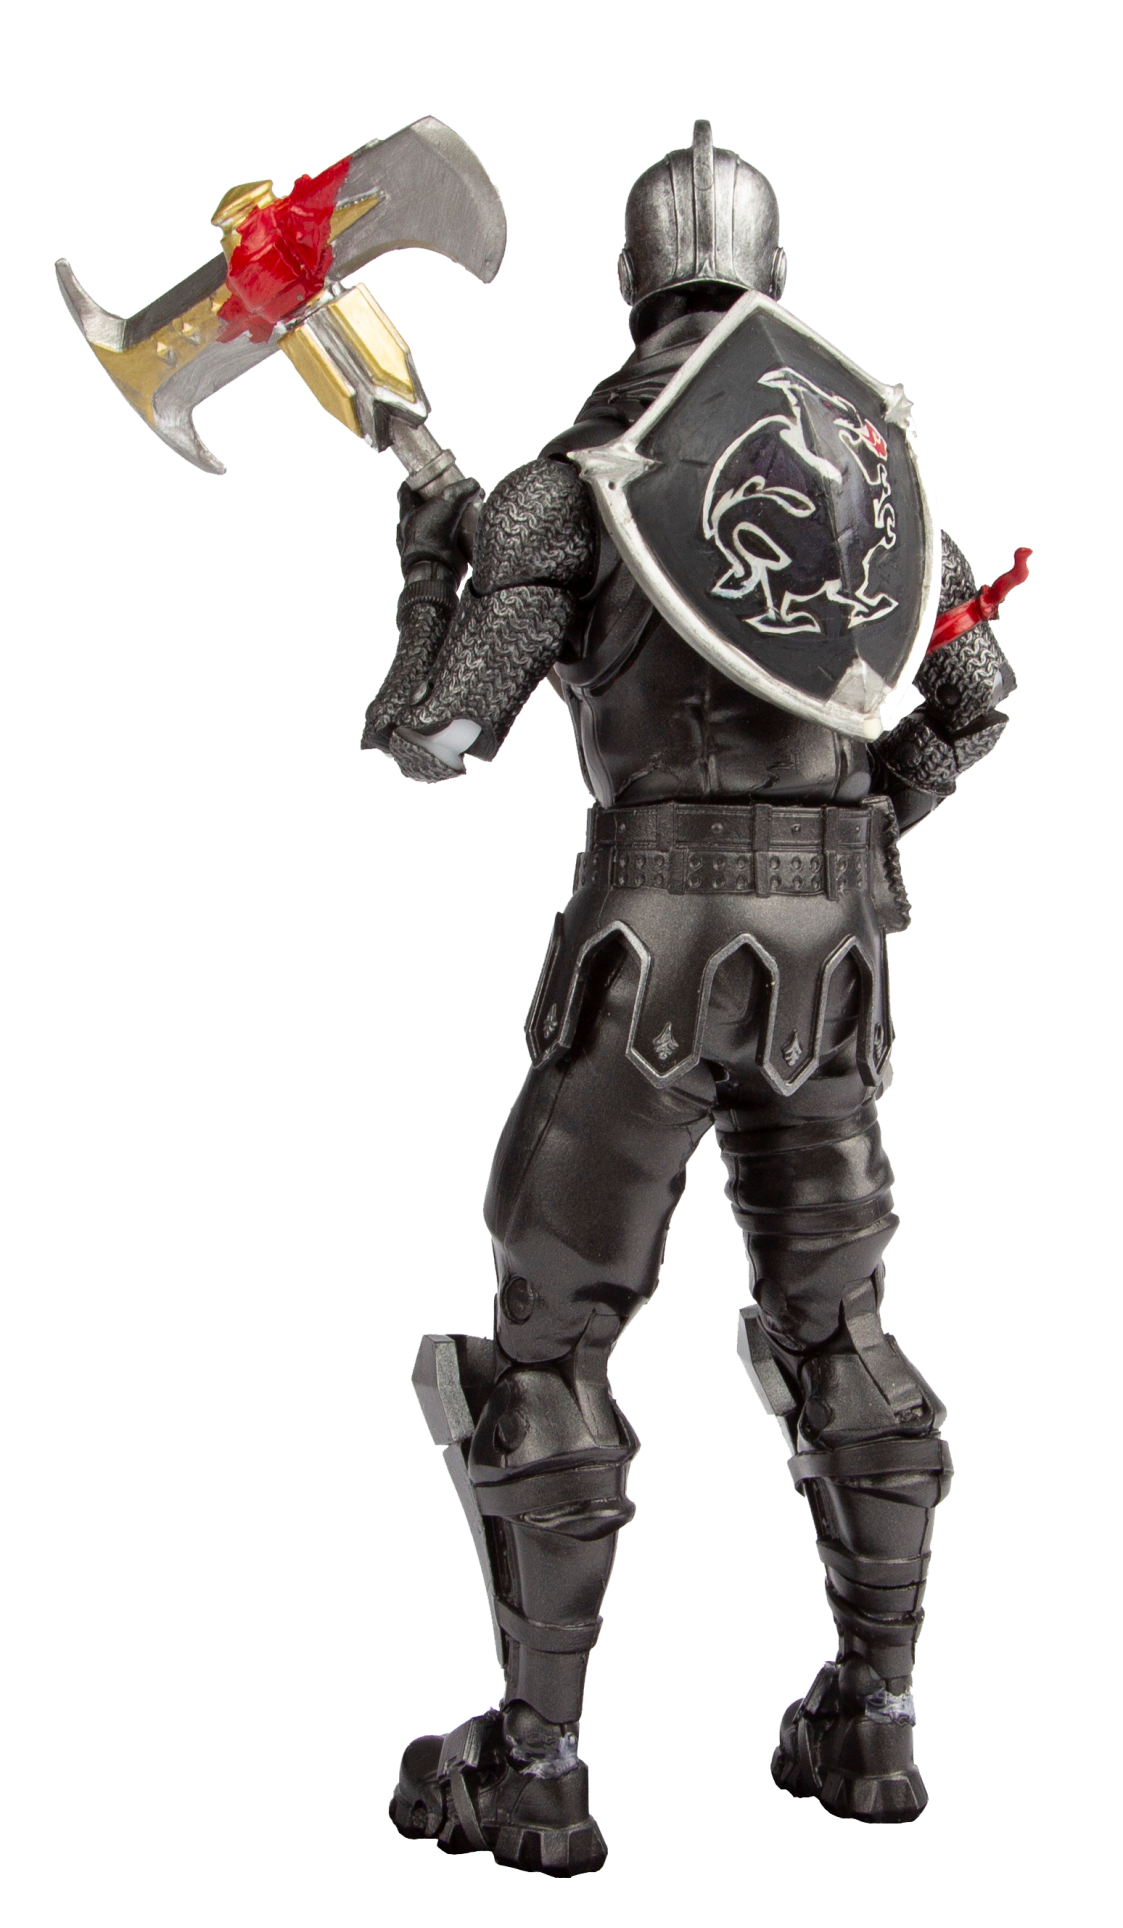 Fortnite Black Knight 7" Action Figure